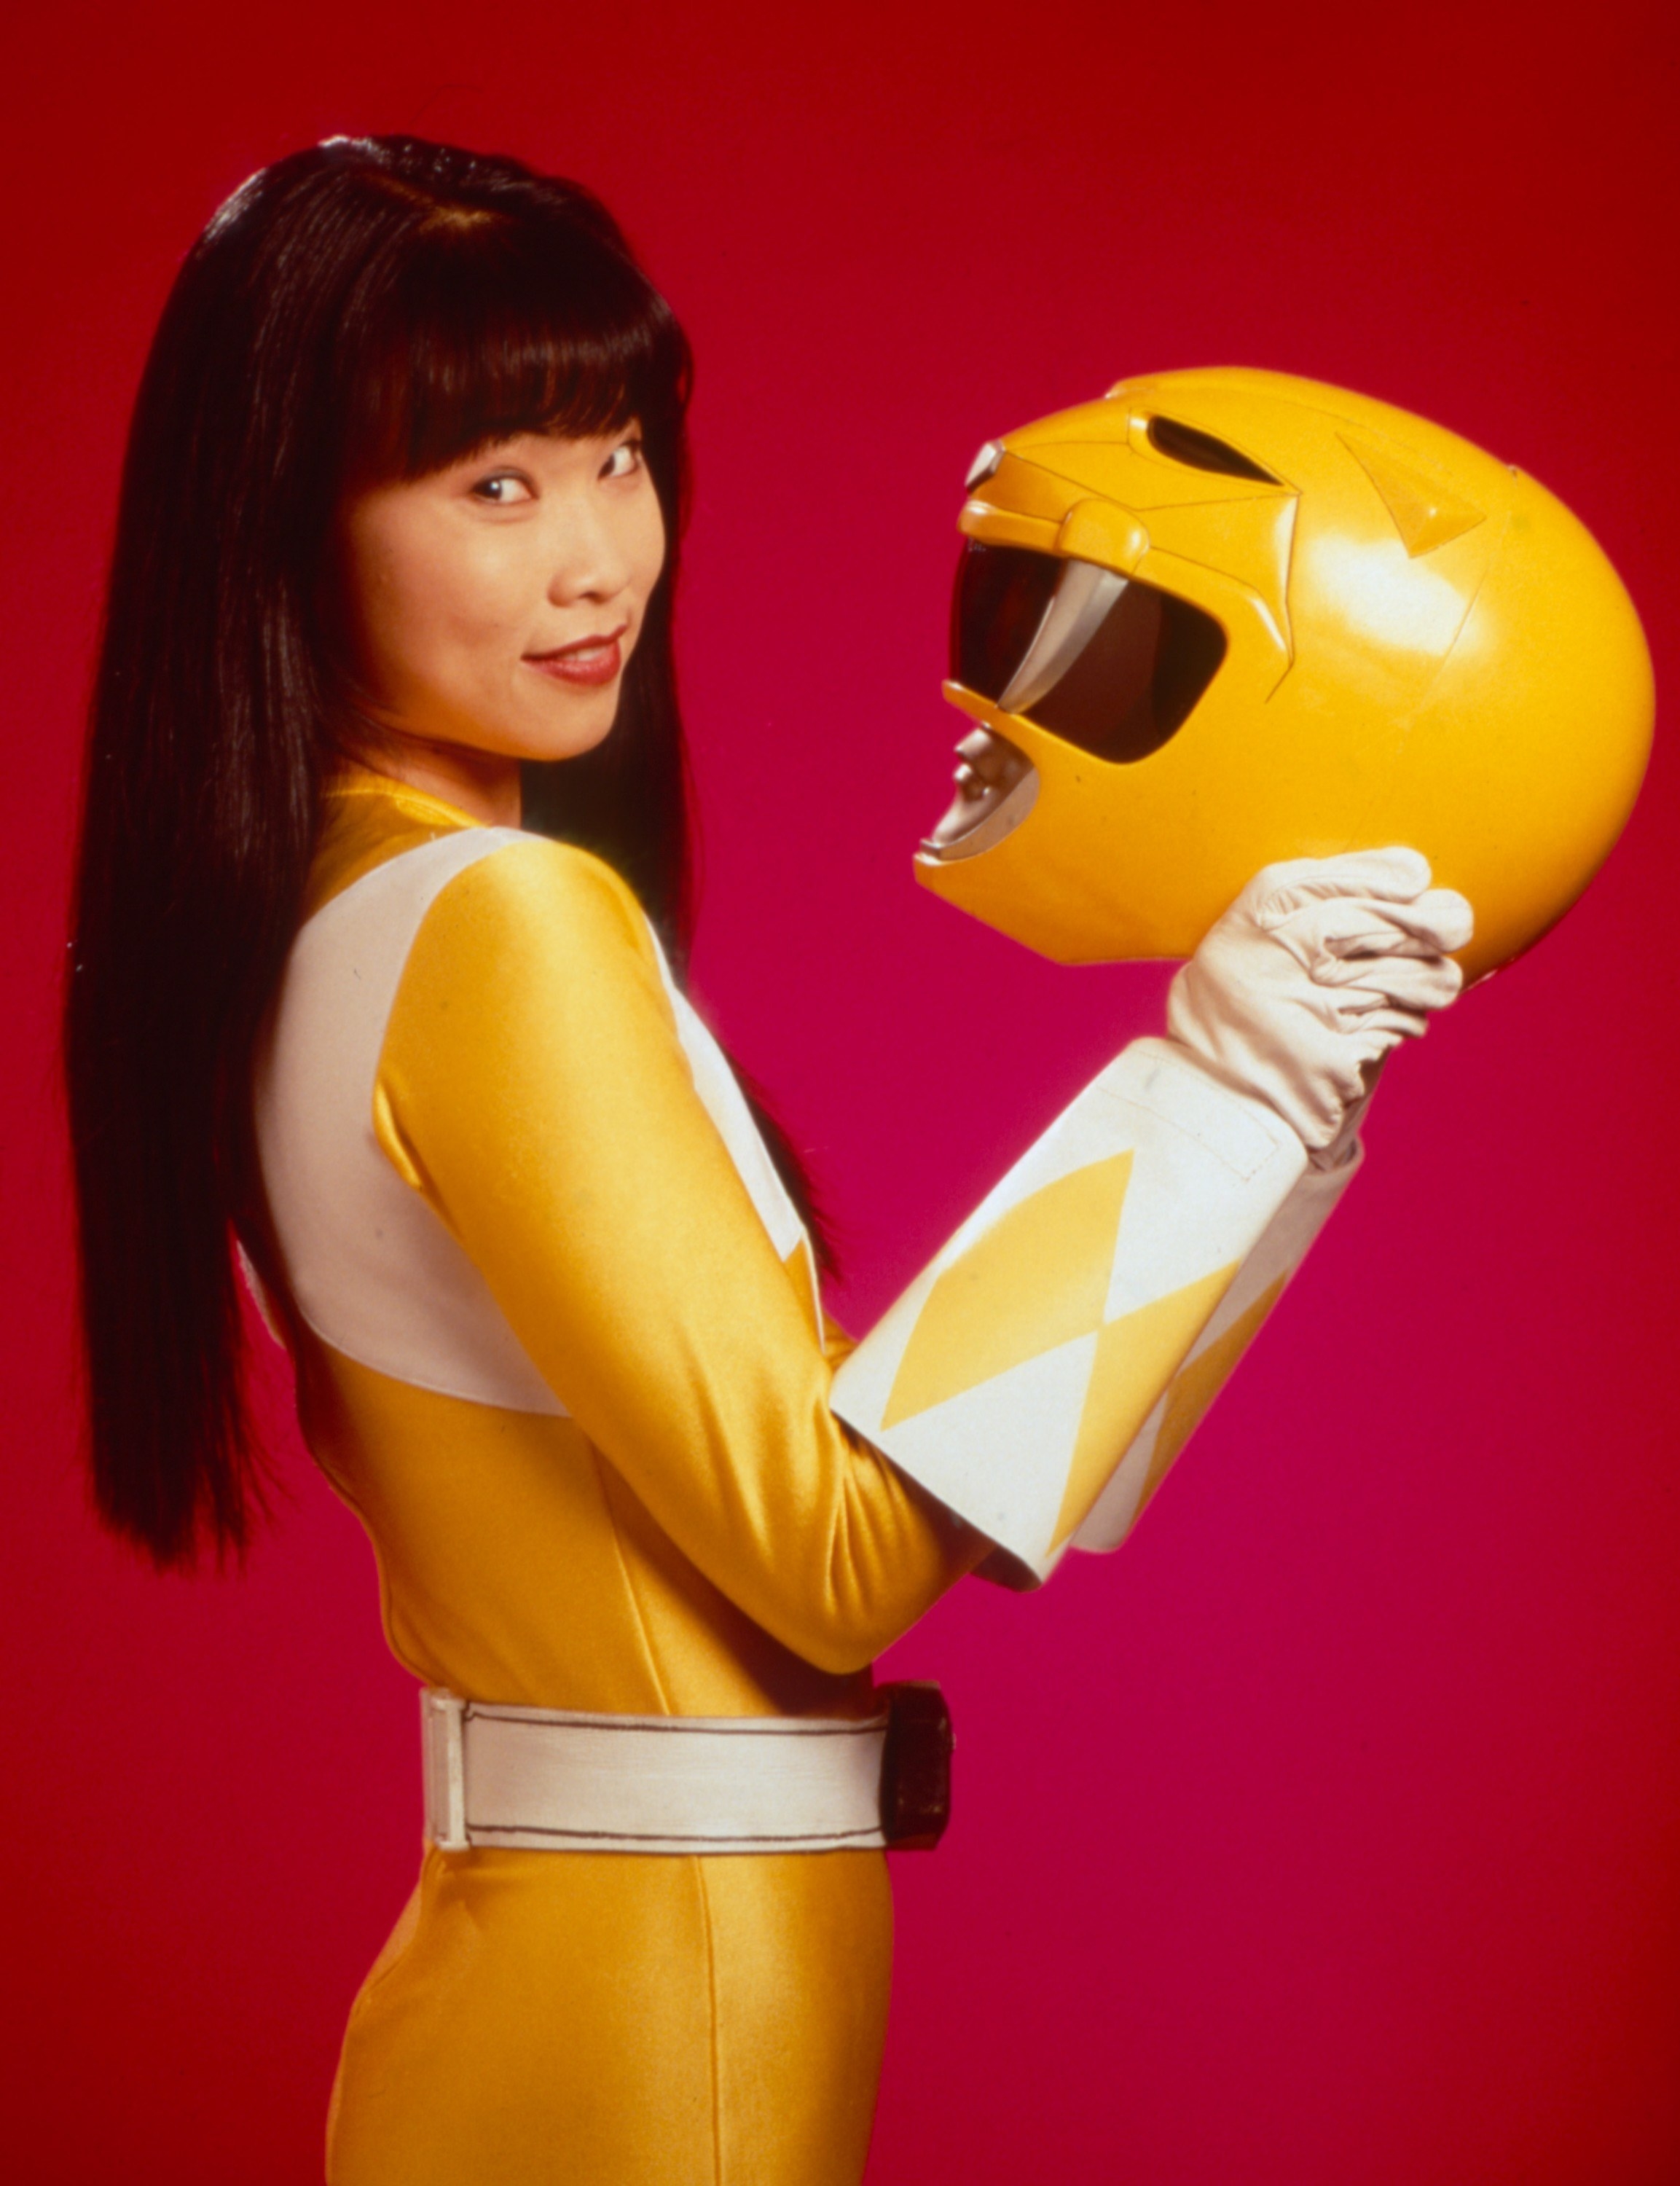 Thuy Trang in her yellow ranger costume